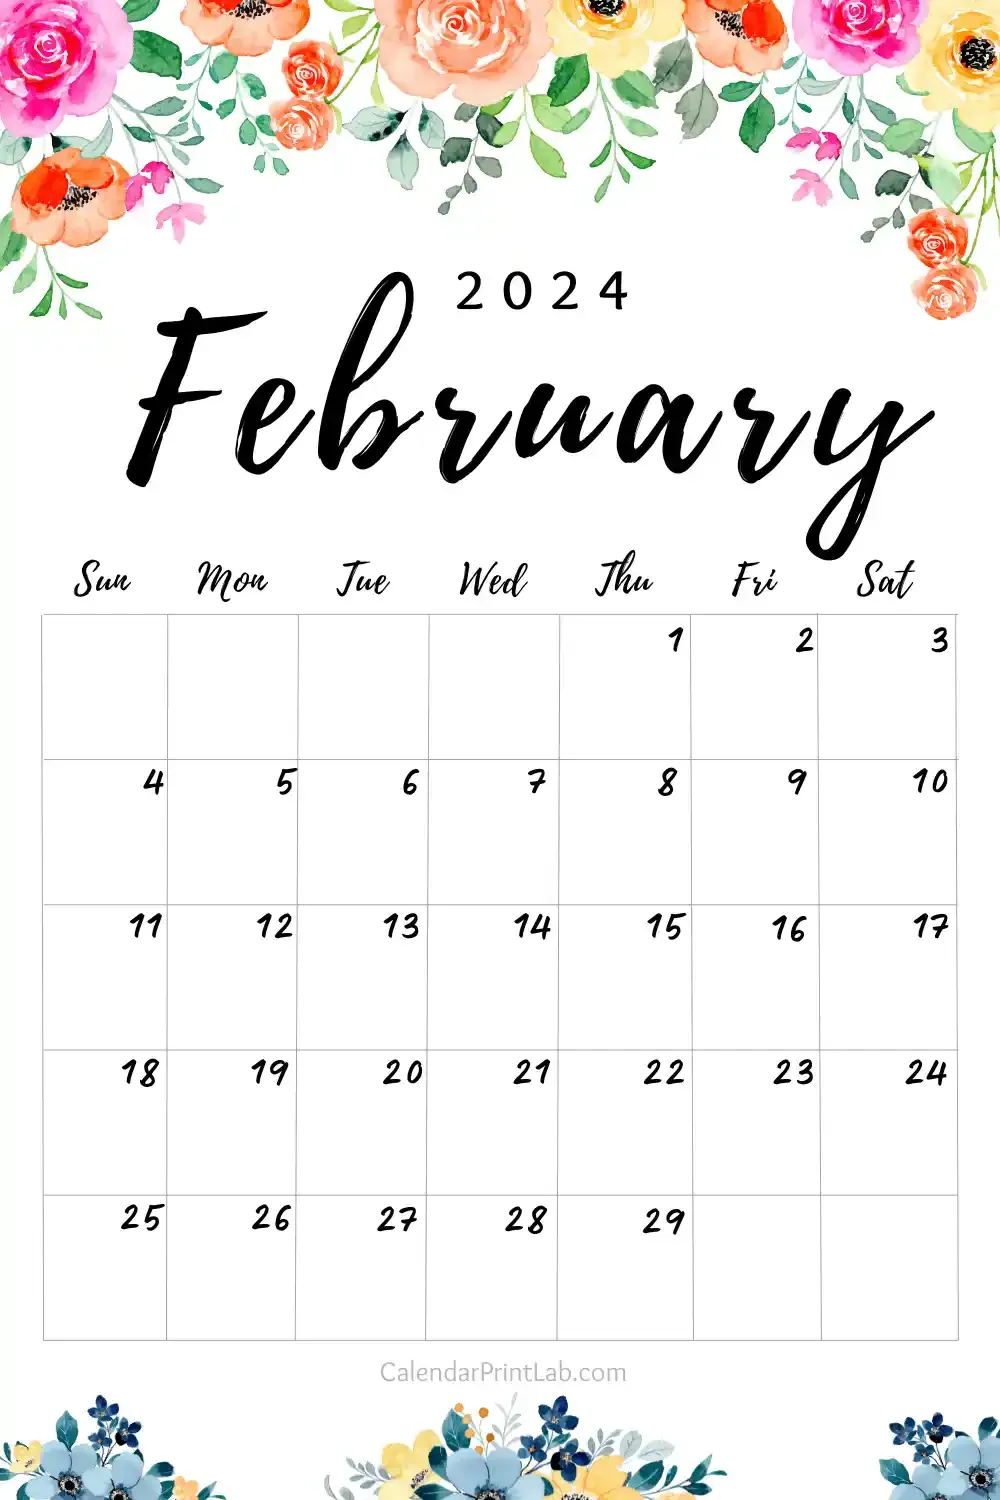 February 2024 Flower Calendar Design